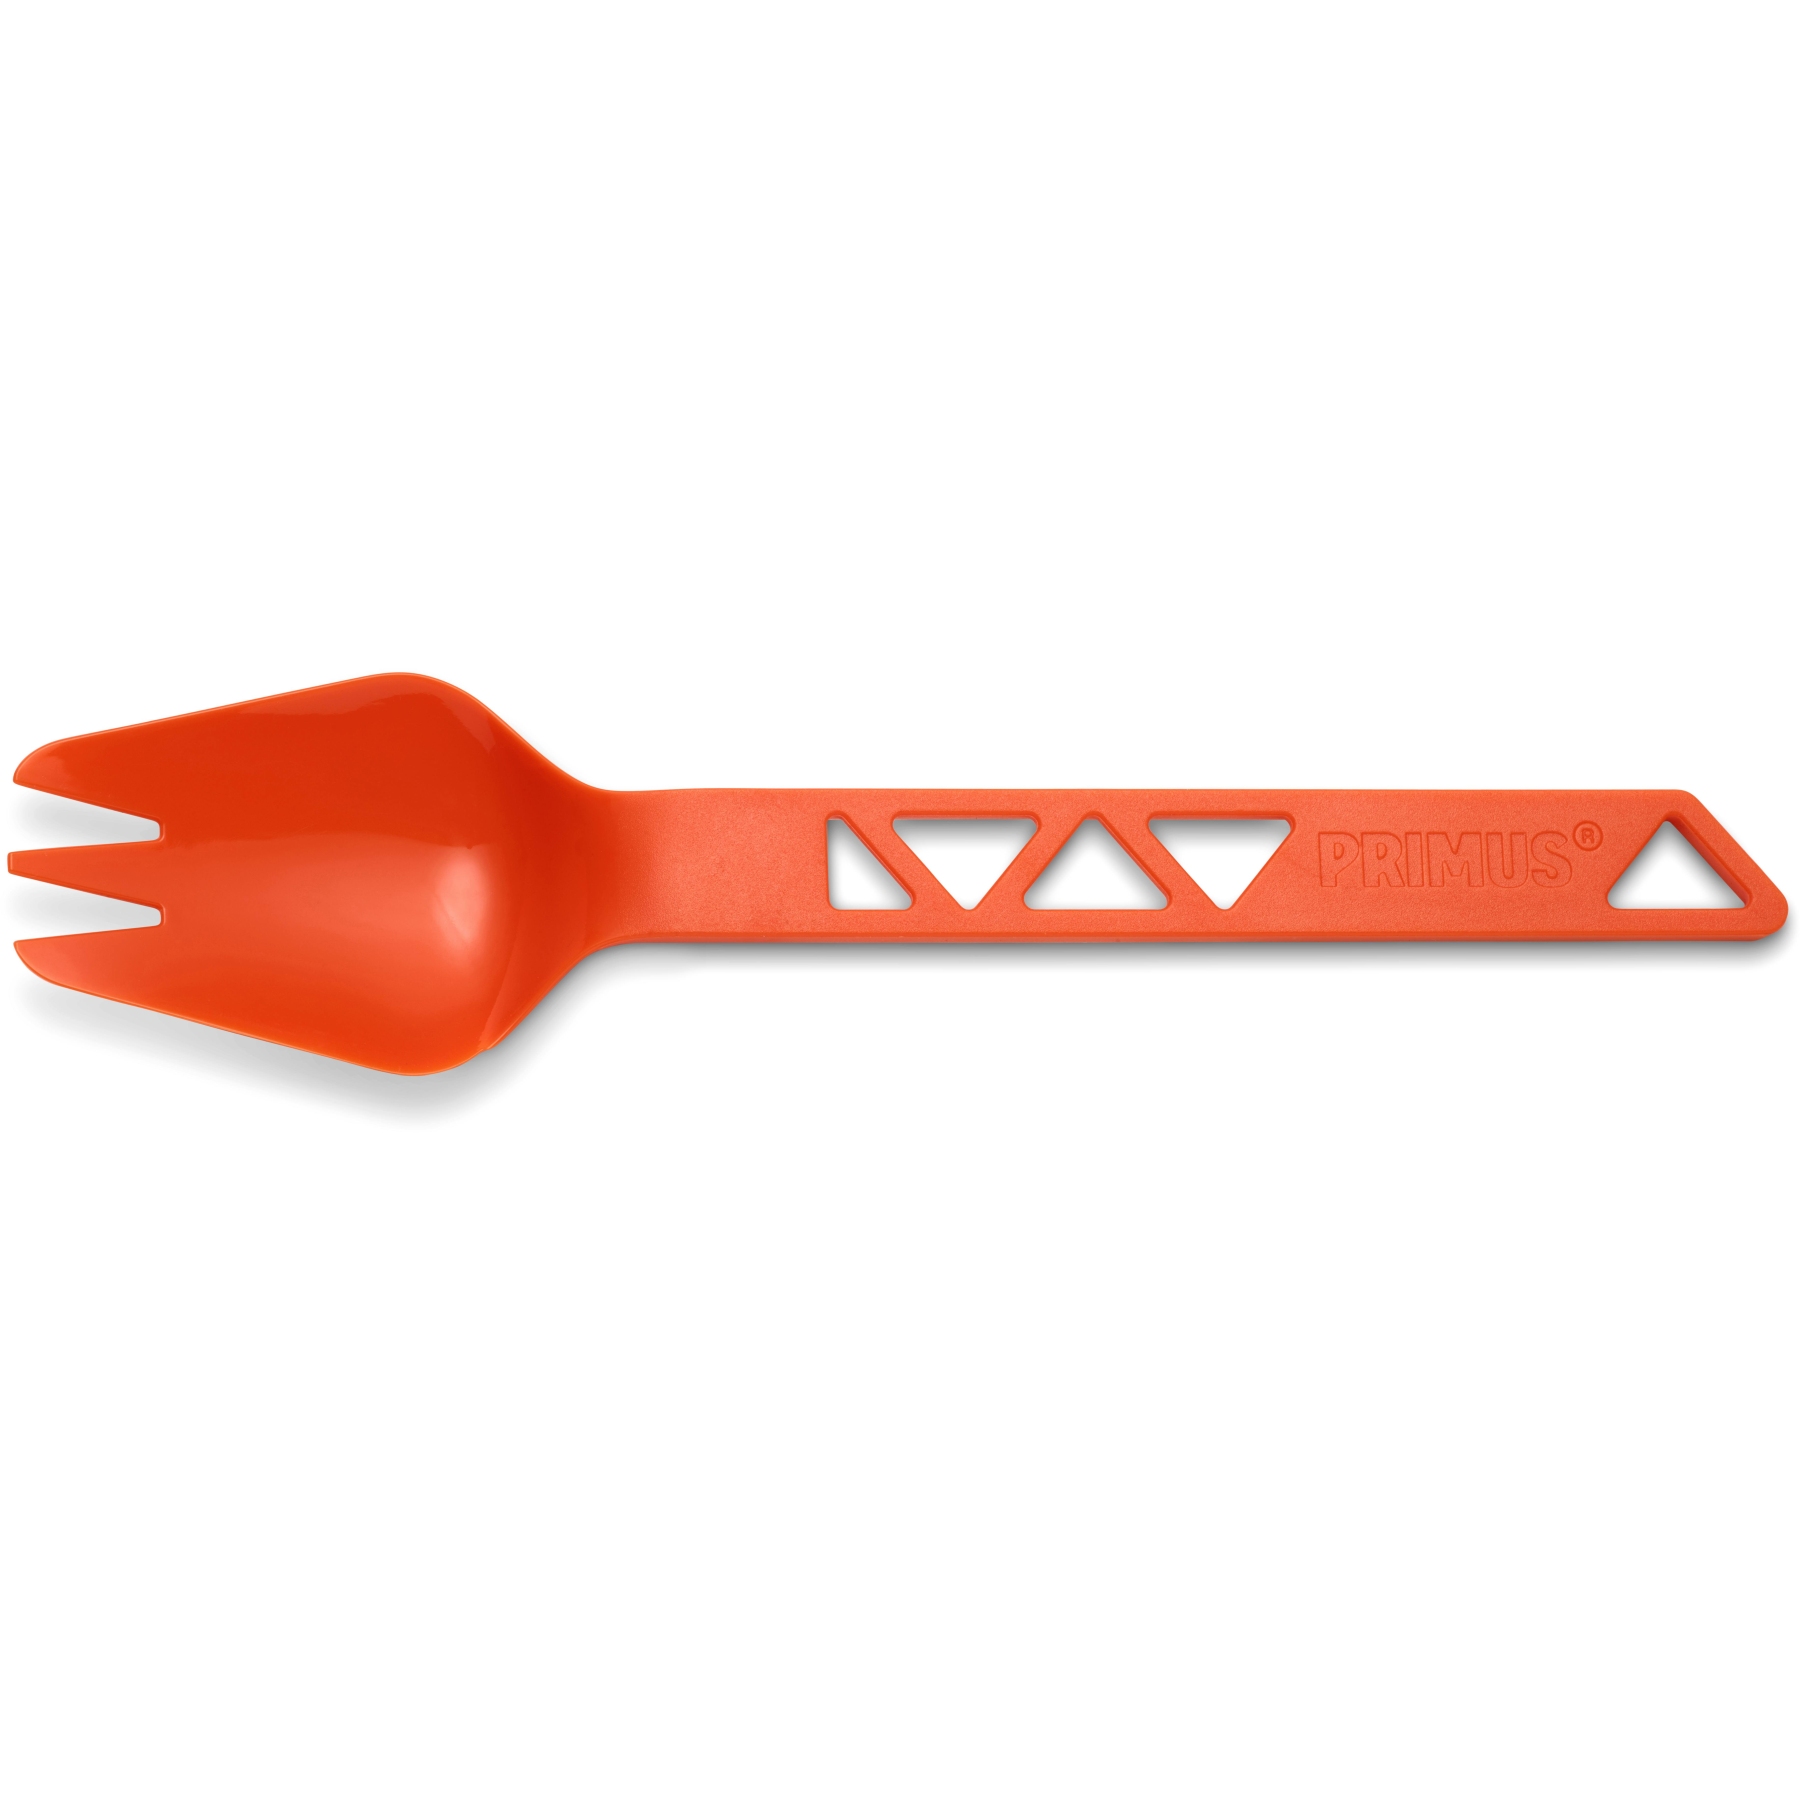 Productfoto van Primus TrailSpork Tritan Cutlery - tangerine